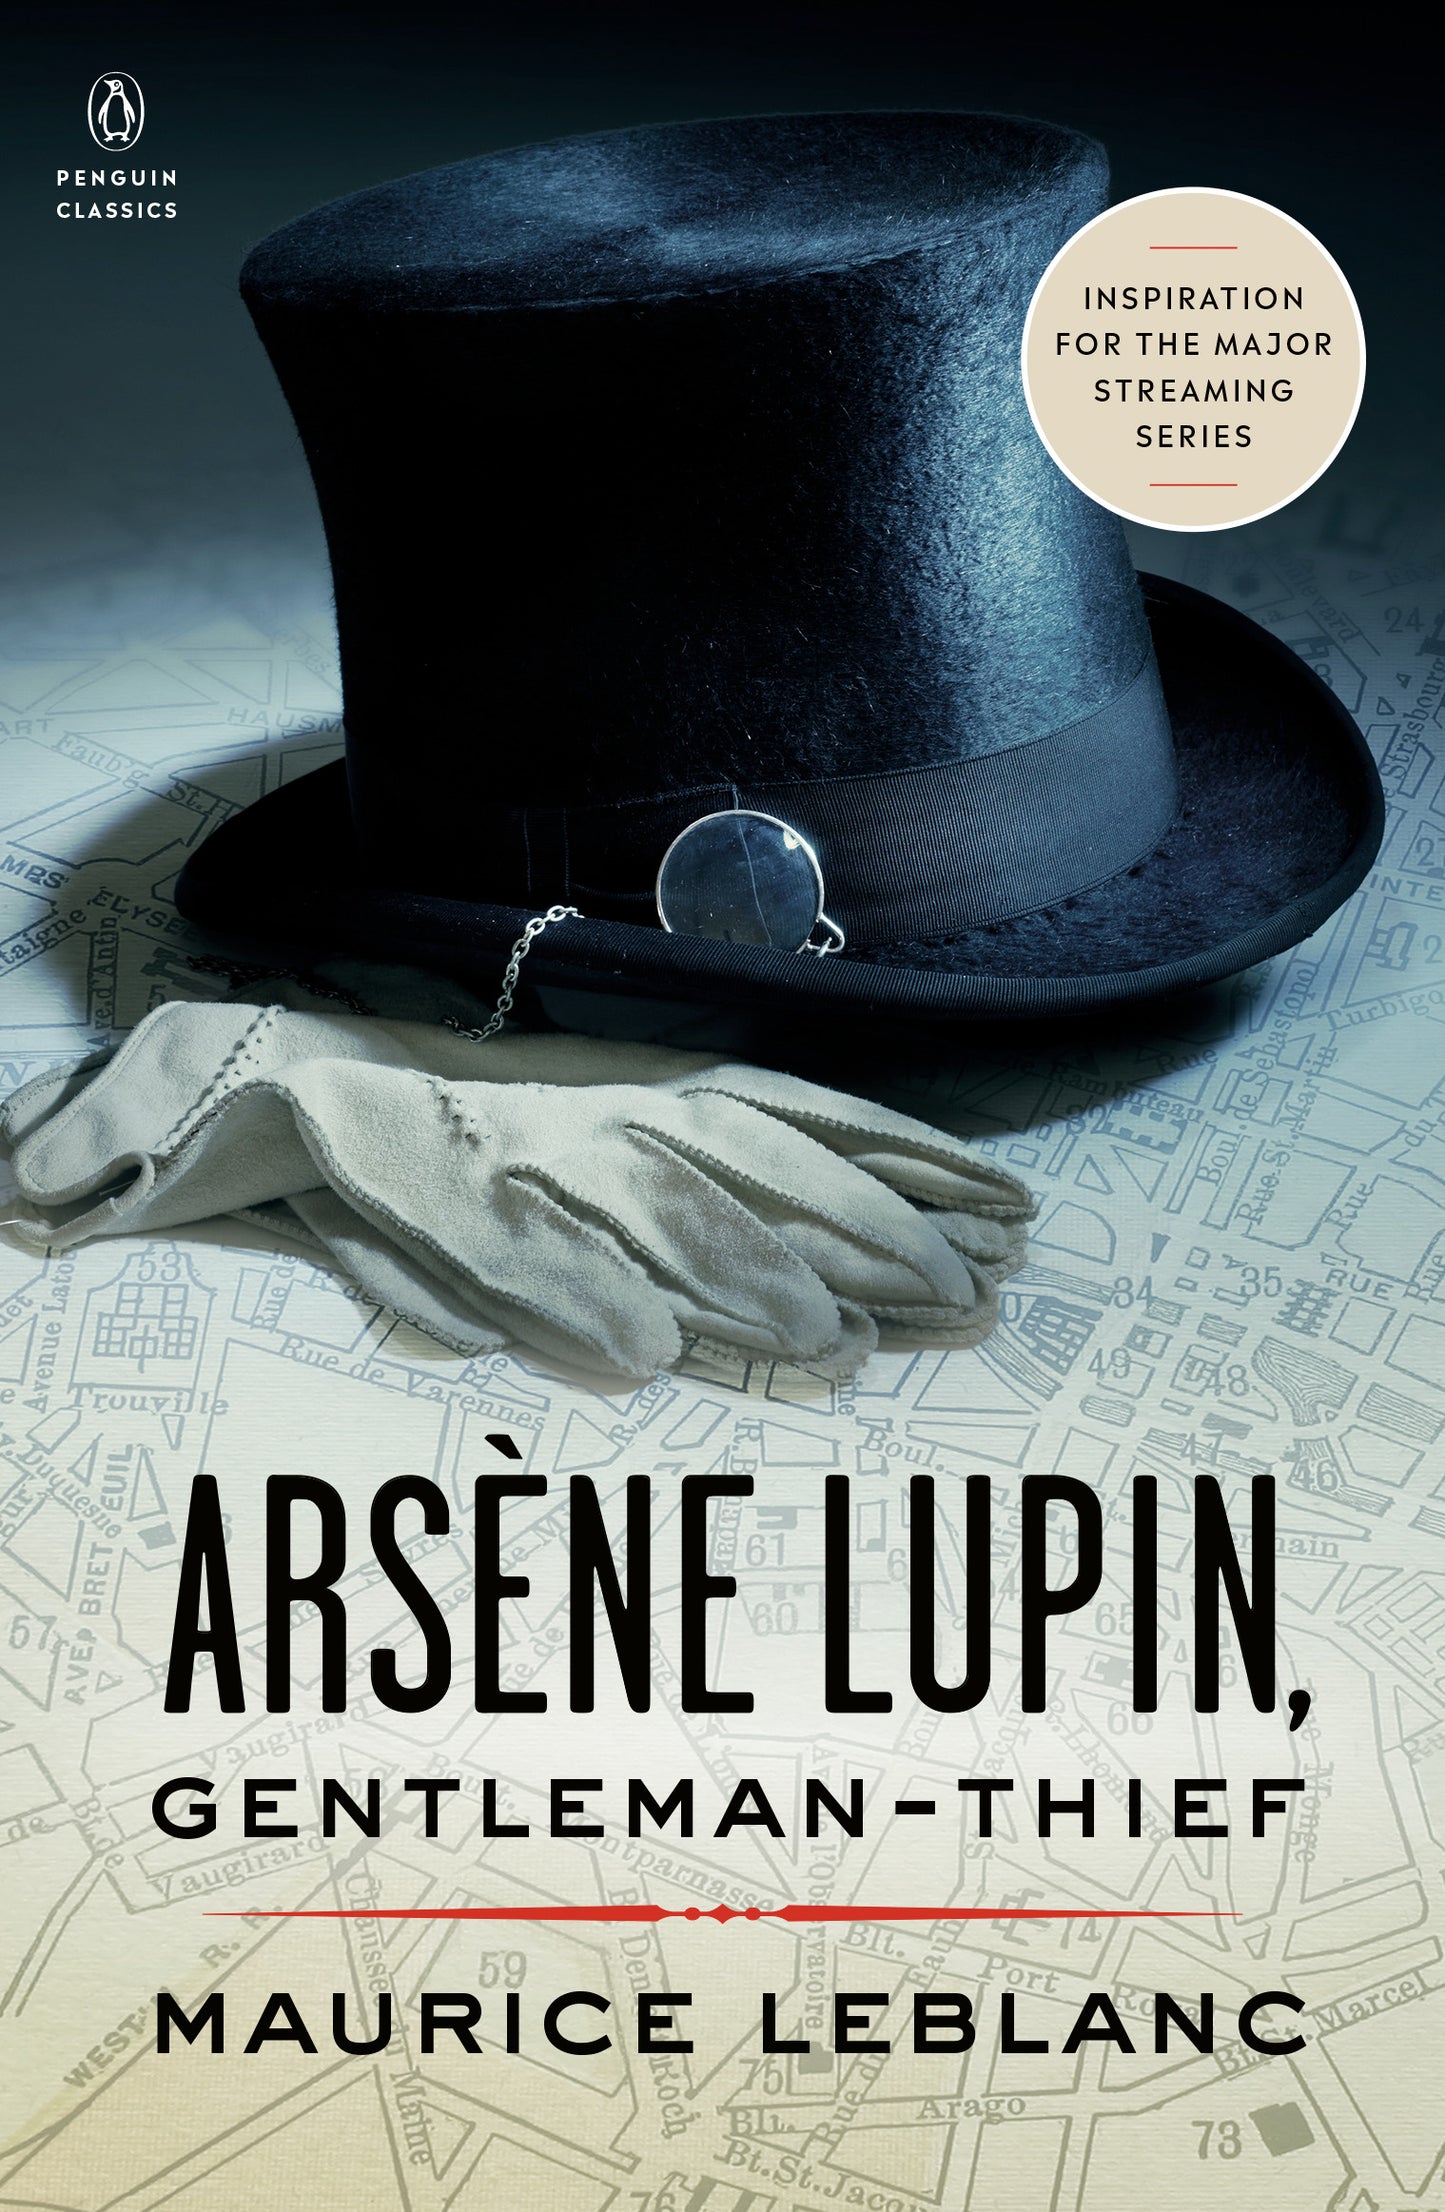 ArsÃƒÆ’Ã†â€™Ãƒâ€šÃ‚Â¨ne Lupin, Gentleman-Thief